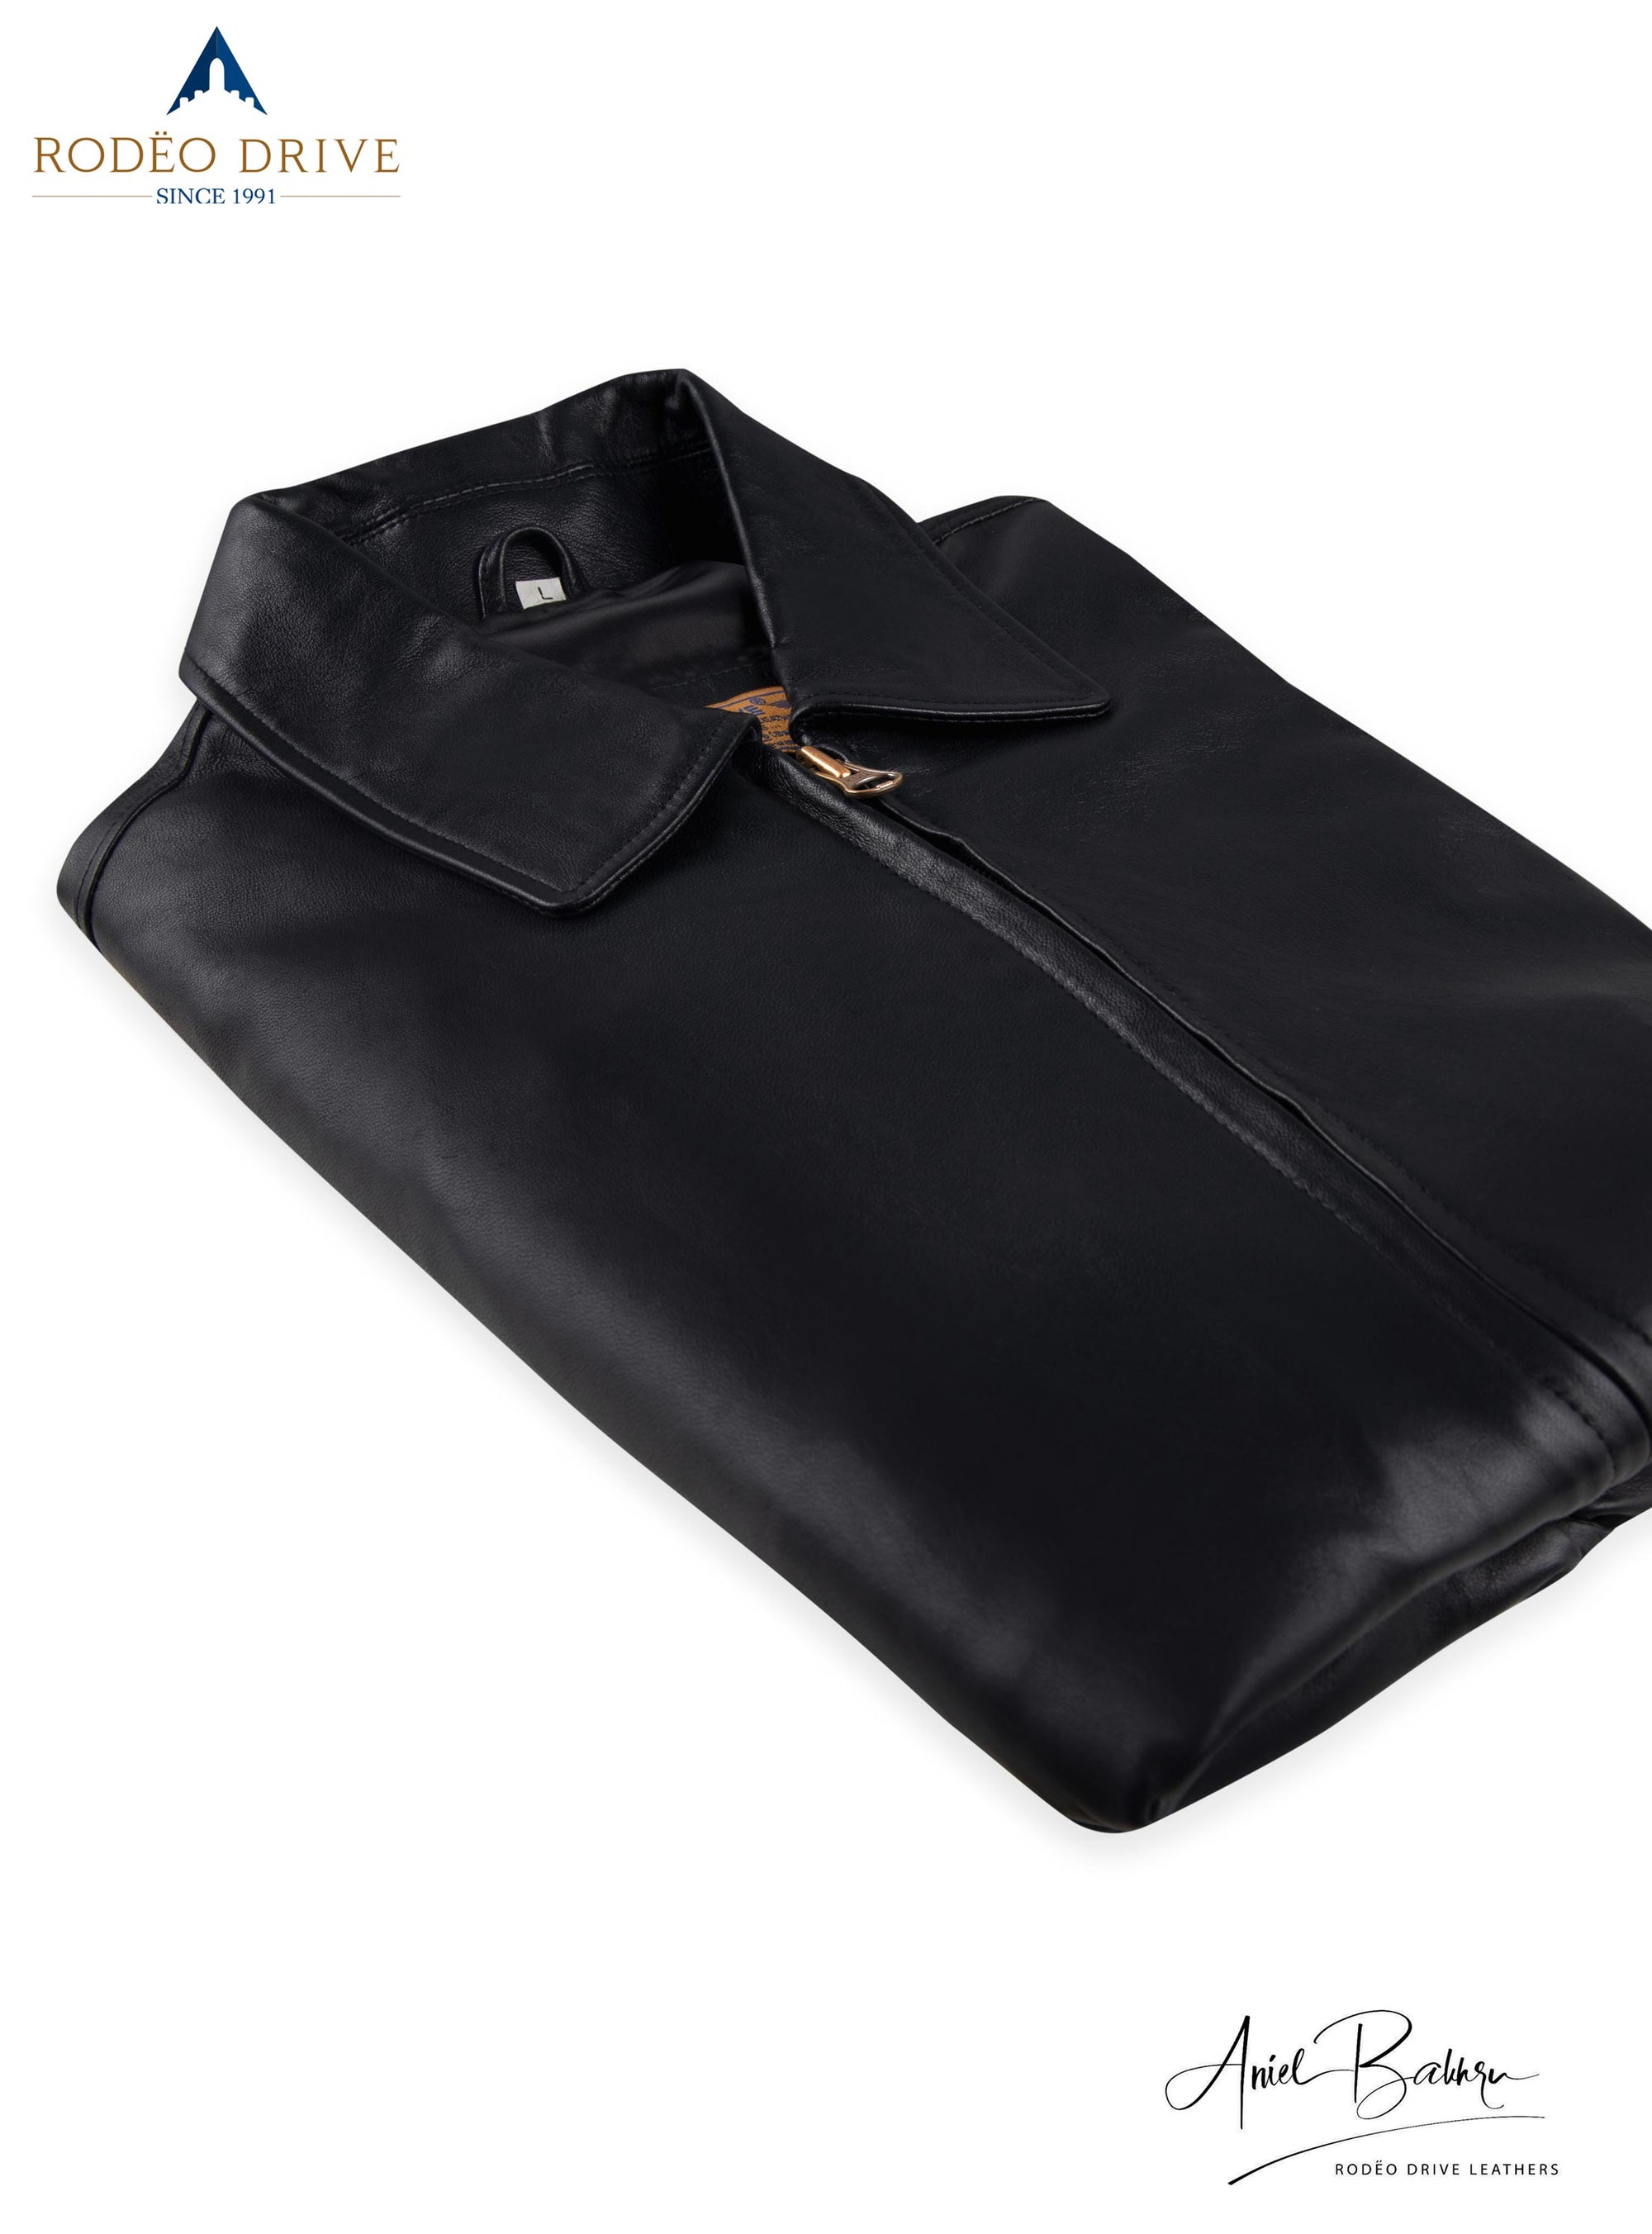 Folded image of black leather jacket. It appears elegant.